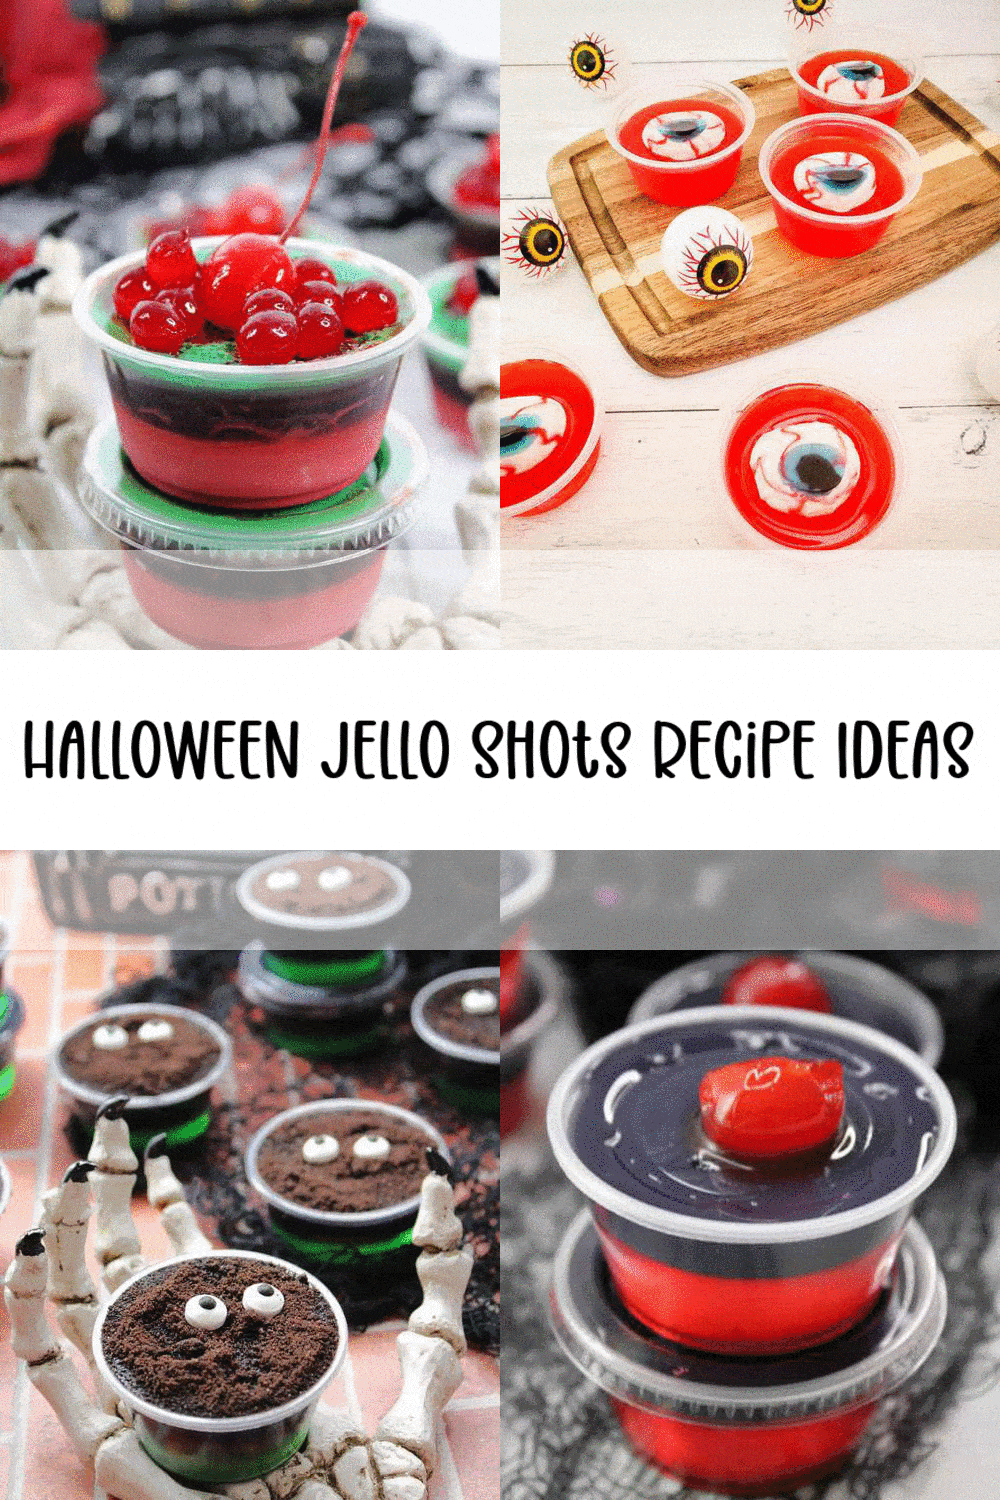 Halloween Gelatin Shots Recipe Ideas